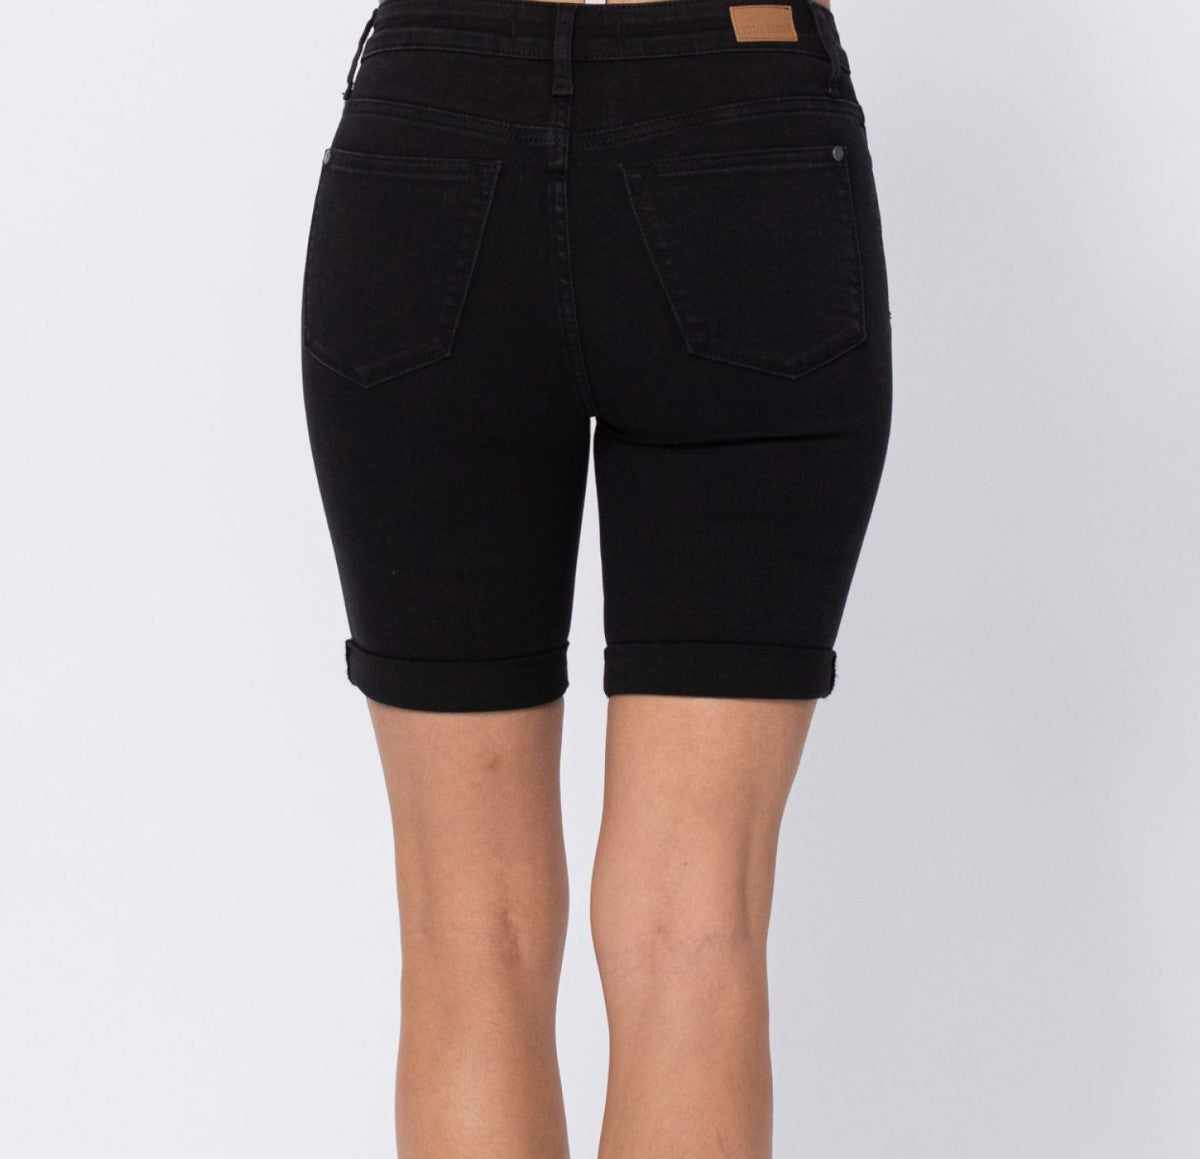 NEW ~ Judy Blue Hi-Rise Black Cuffed Bermuda Shorts - Style #150064REG